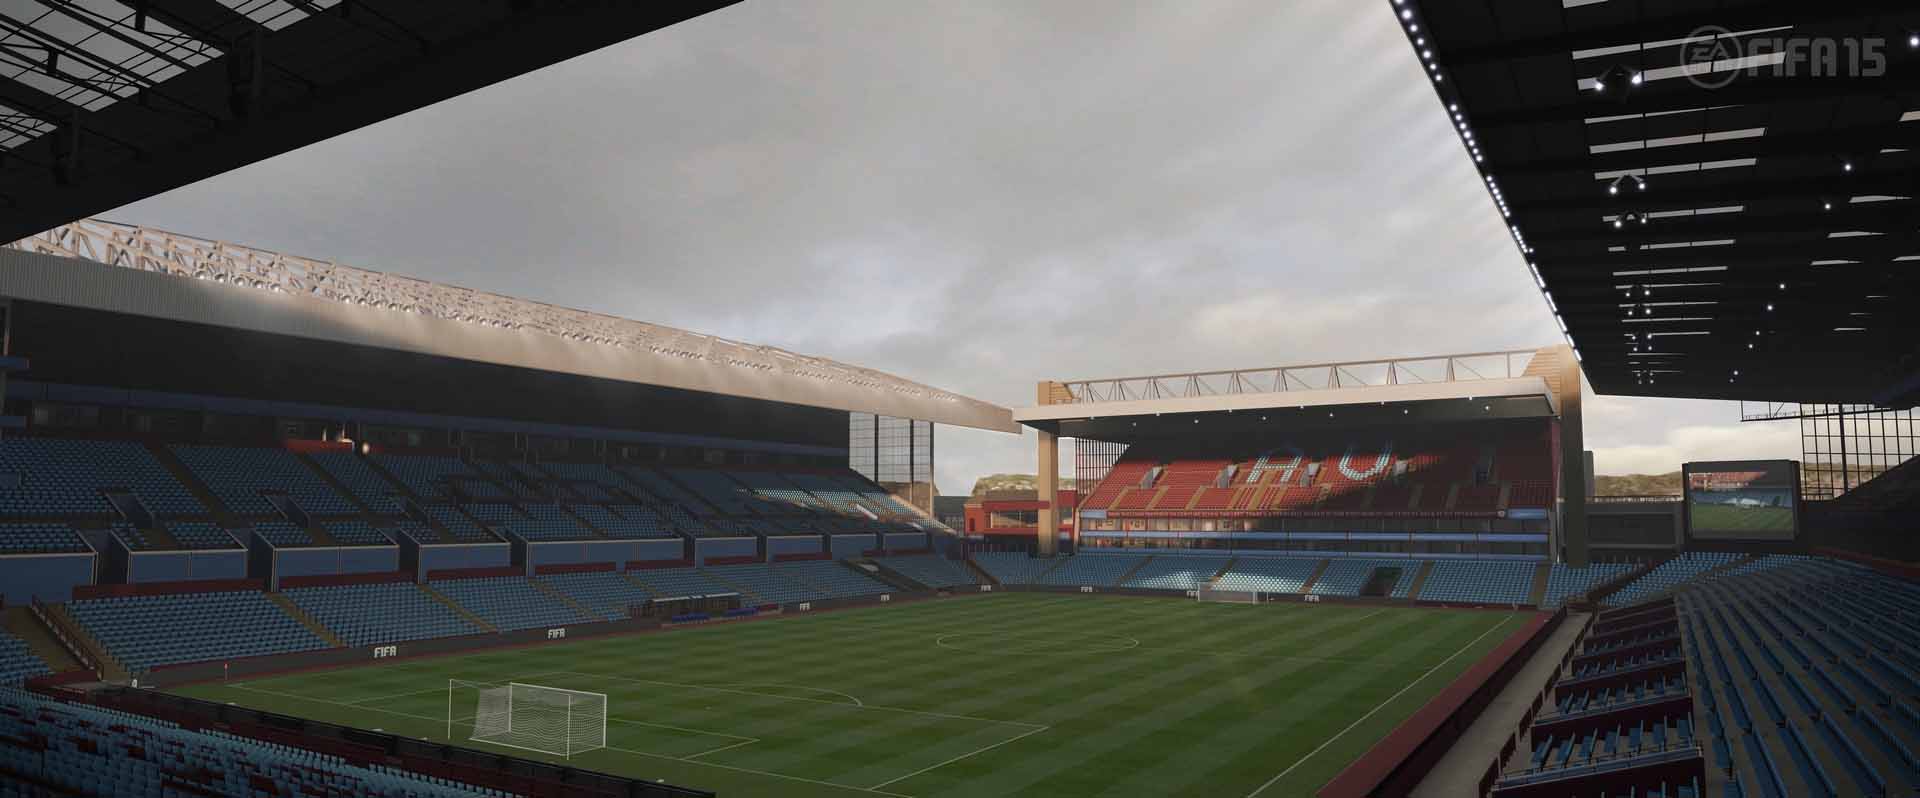 FIFA 15 inclui todos os 20 estádios da Barclays Premier League